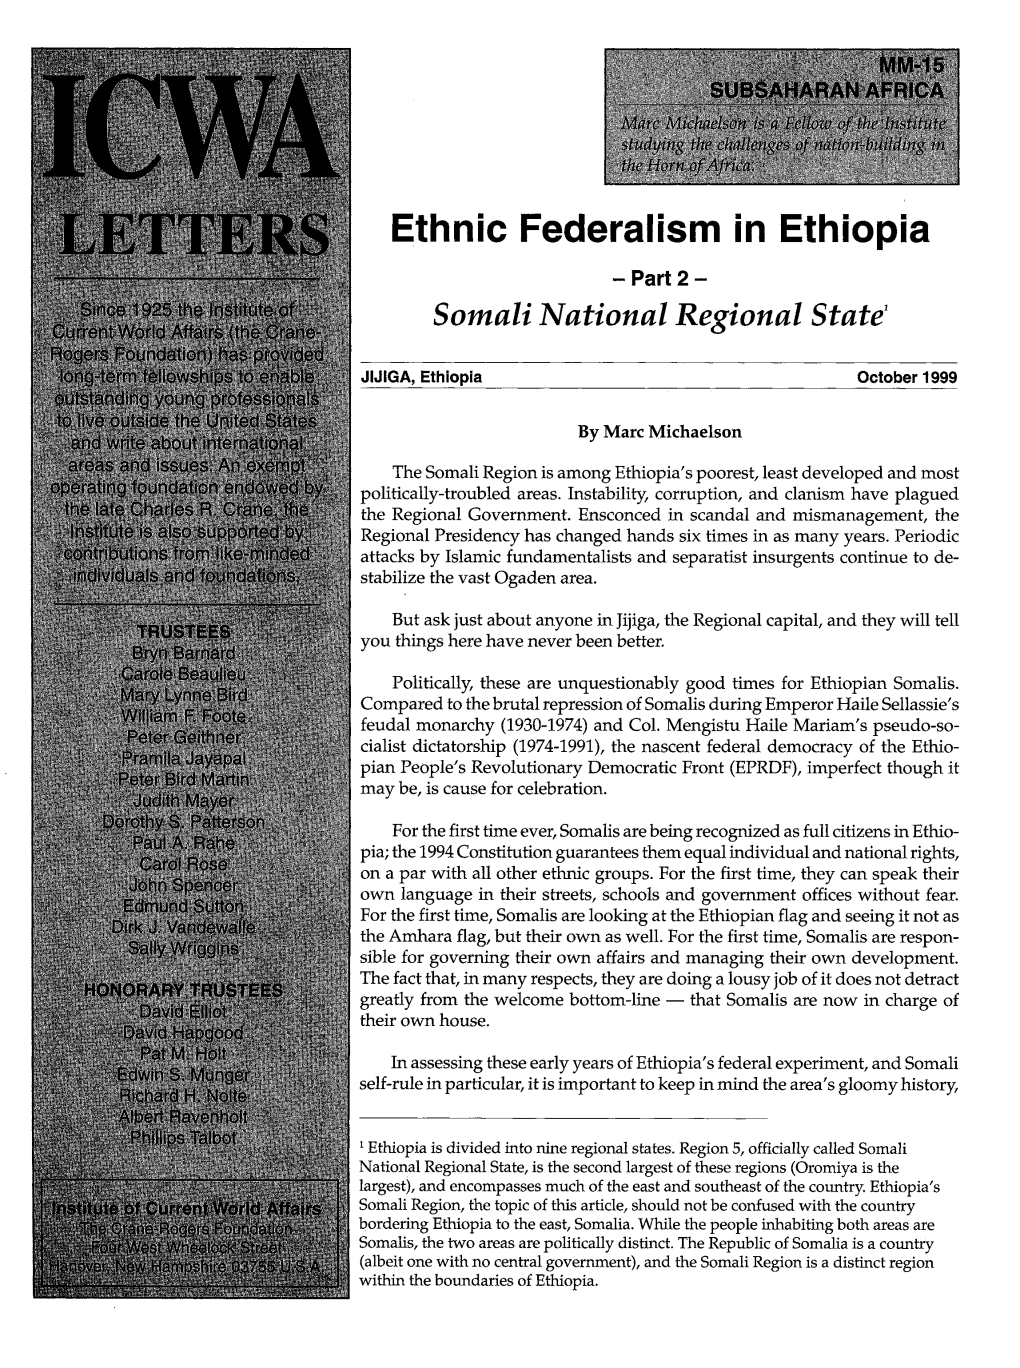 Ethnic Federalism in Ethiopia: Part-2 Somali National Regional State